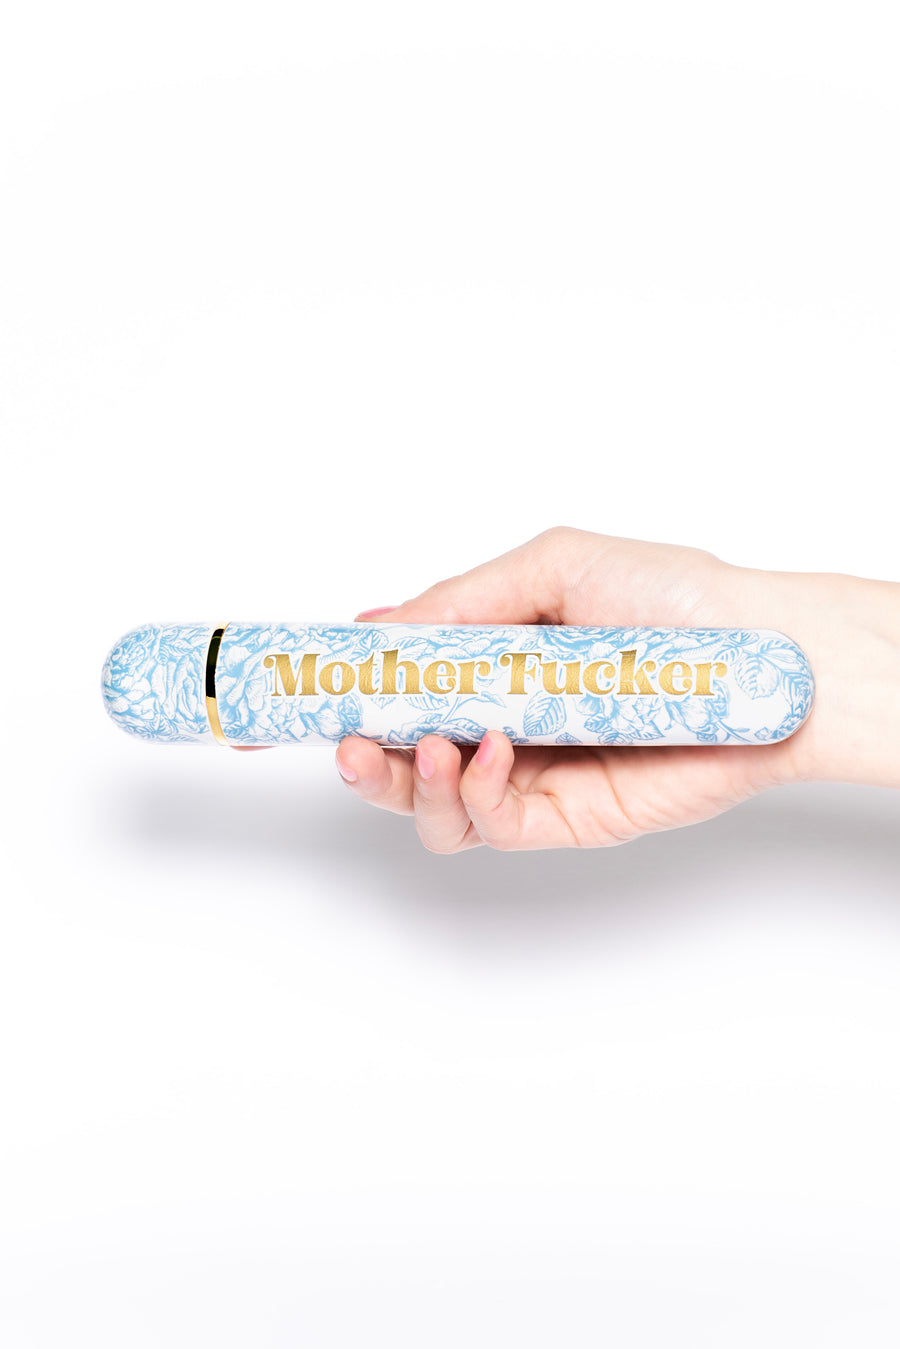 MOTHER FUCKER